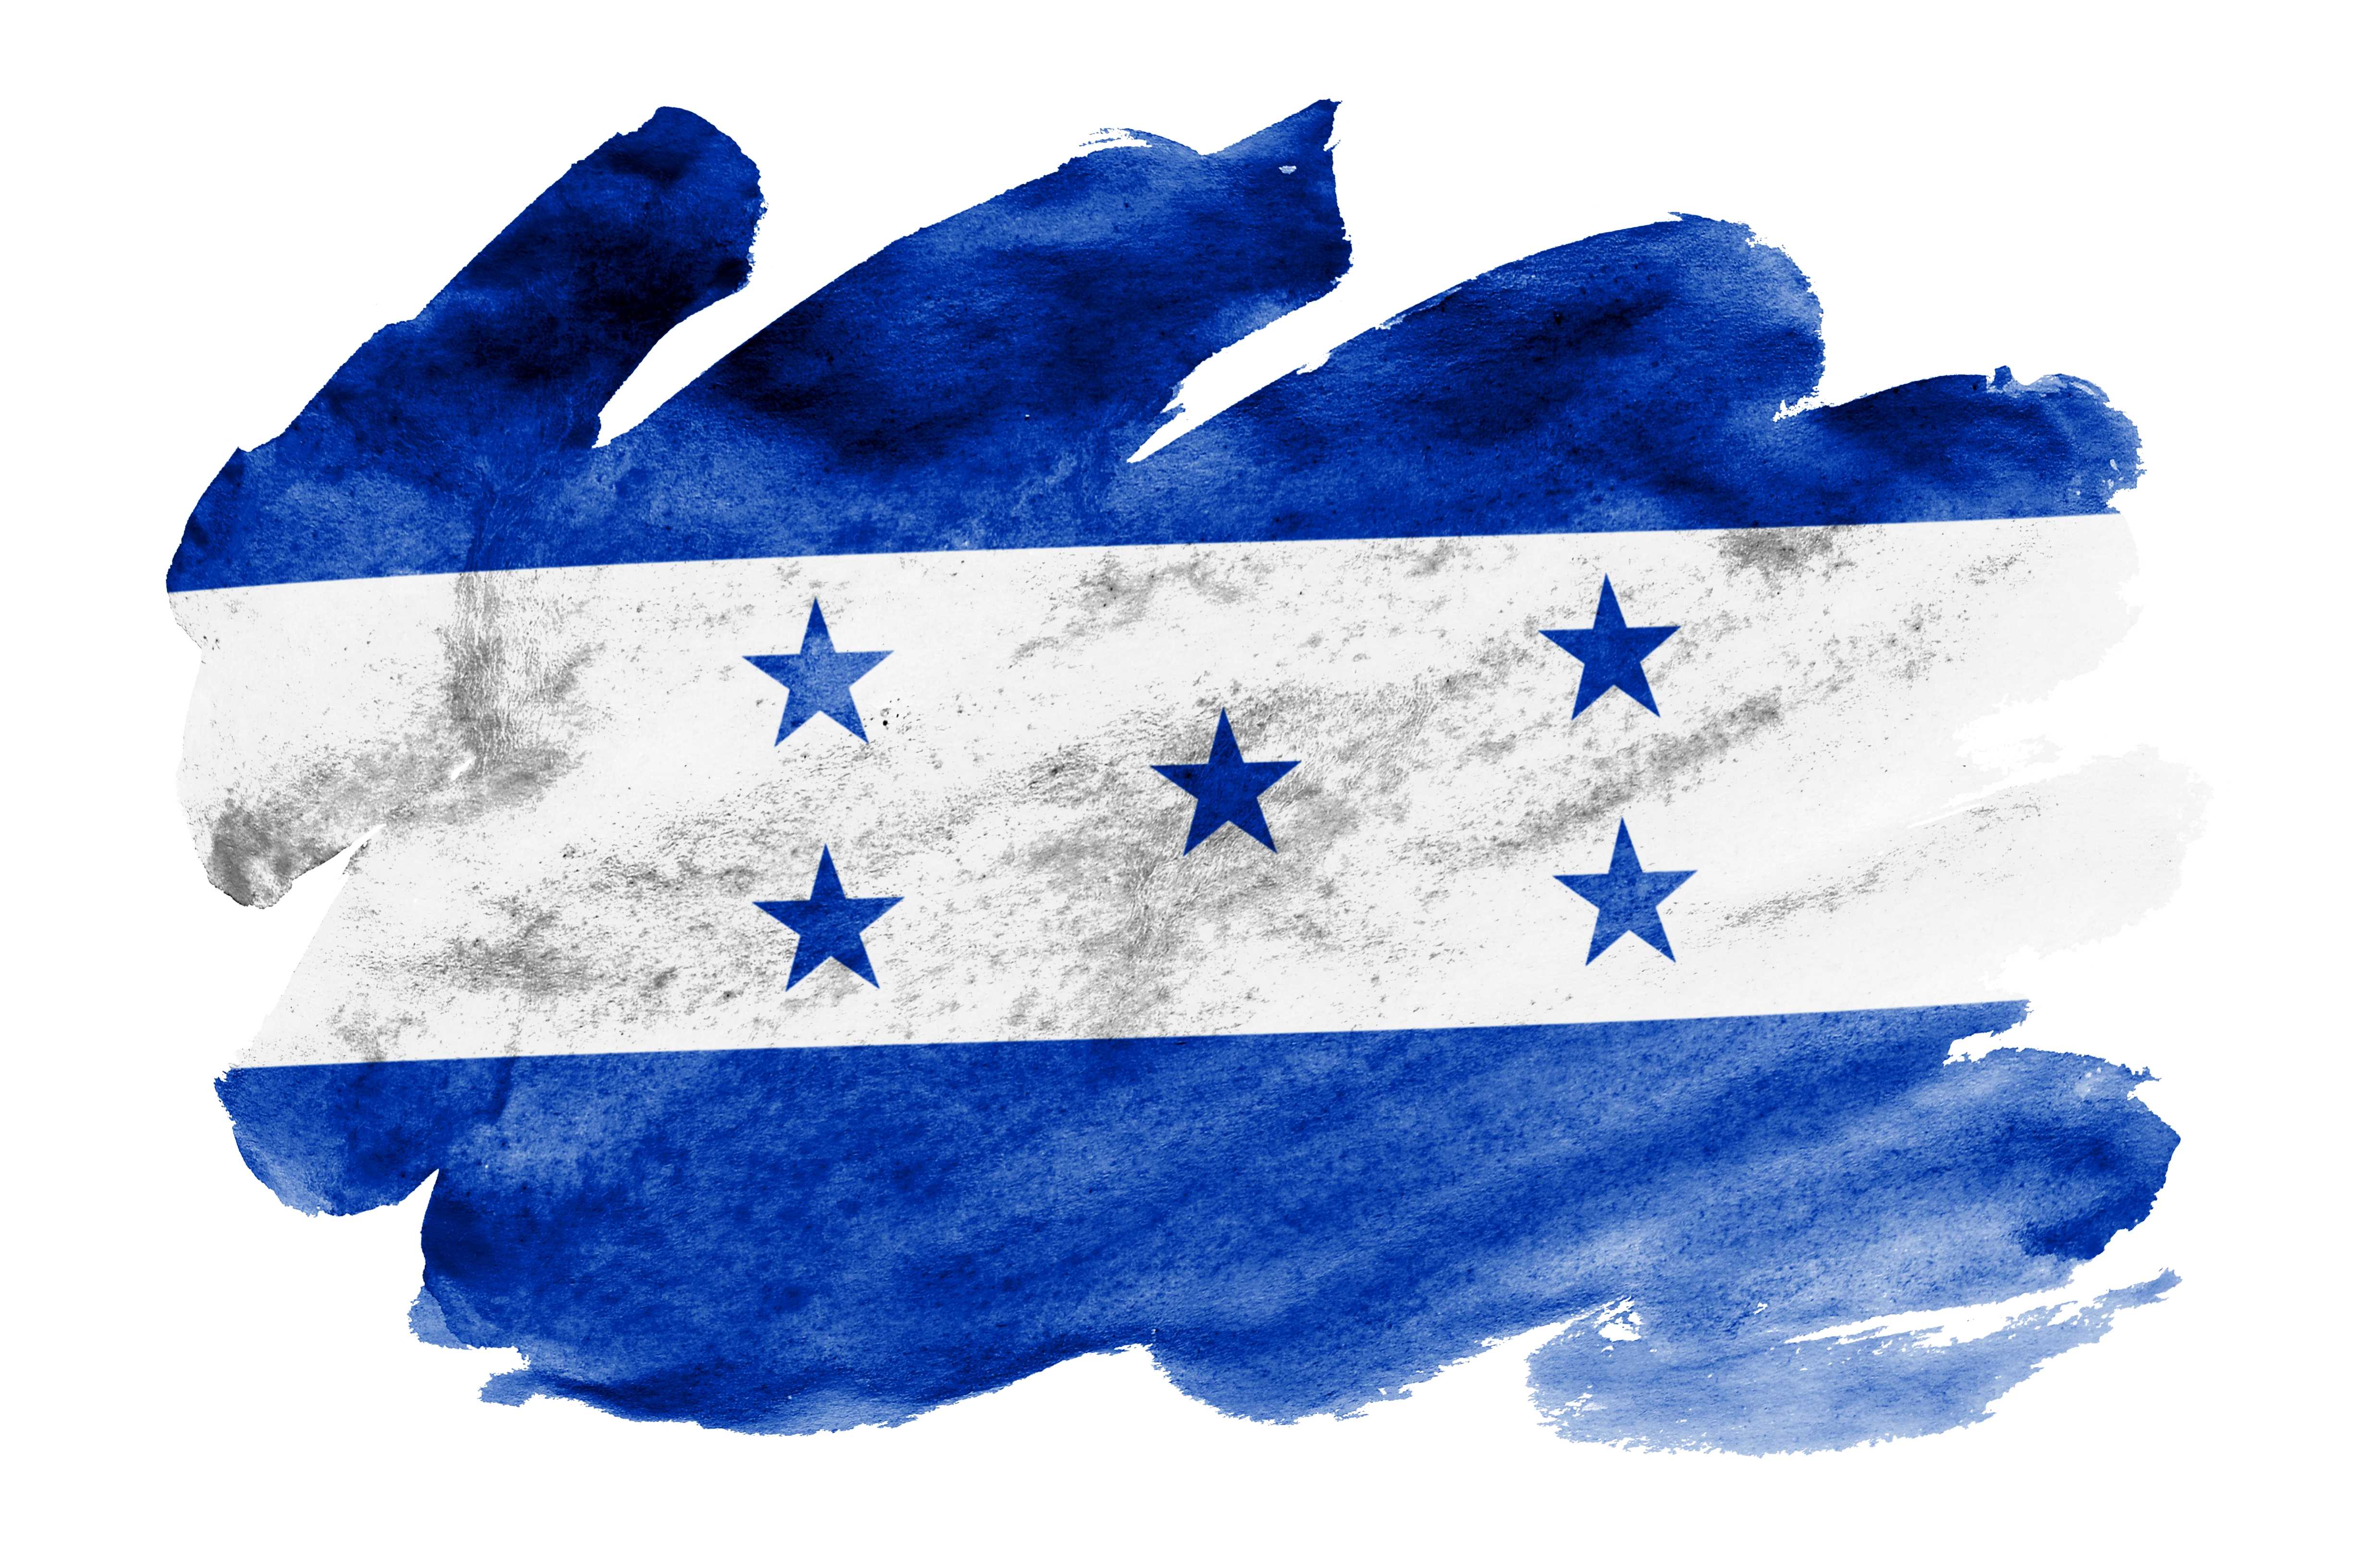 out-honduras-flag-is-depicted-in-liquid-watercolor-sty-K3DCH9Y.jpg